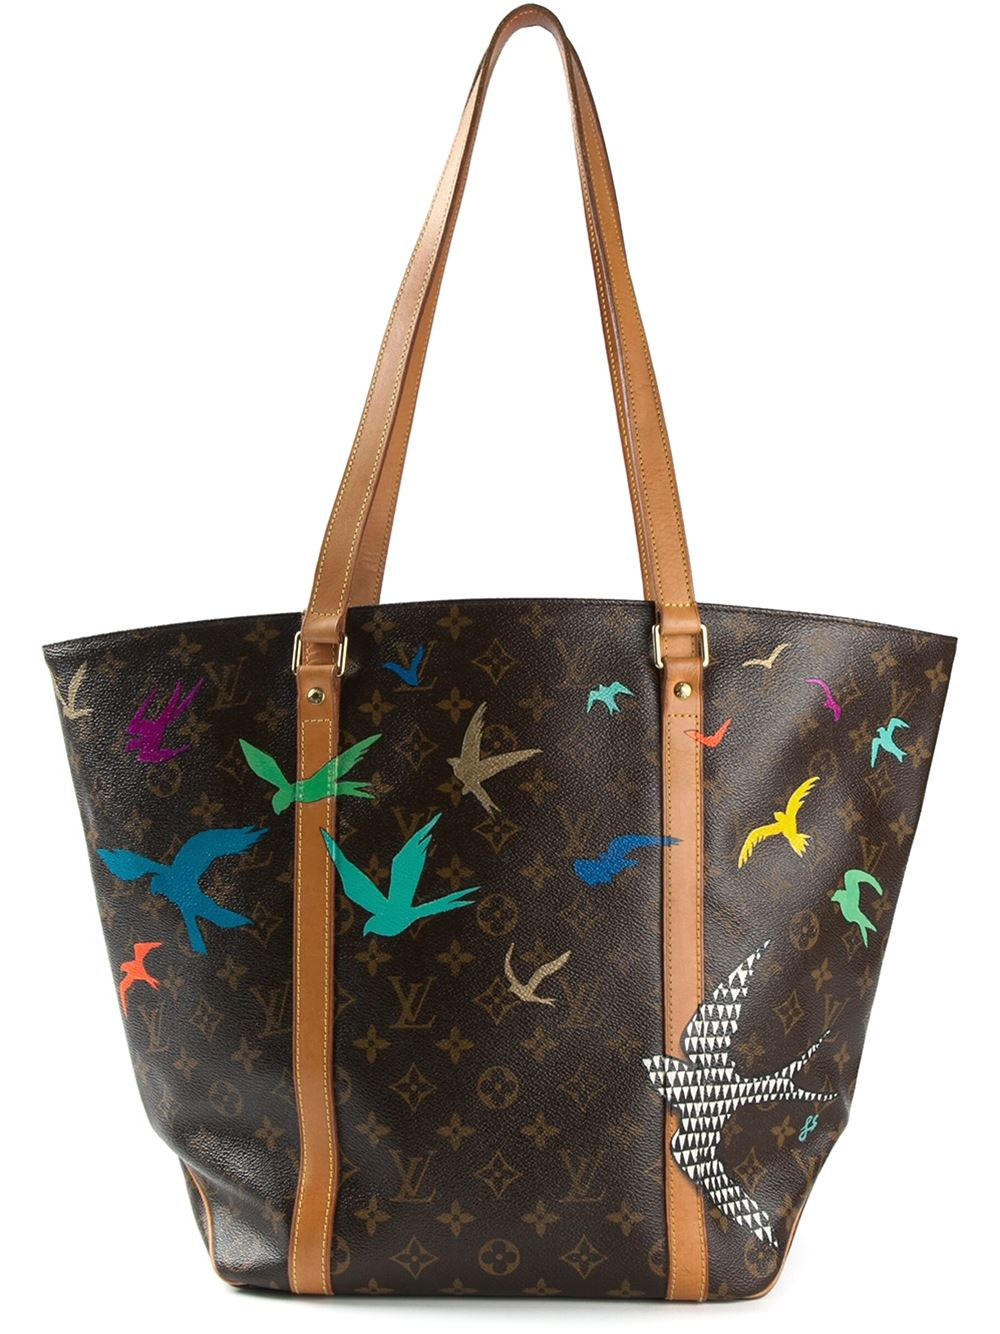 Lyst - Louis Vuitton Bird Print Tote Bag in Brown